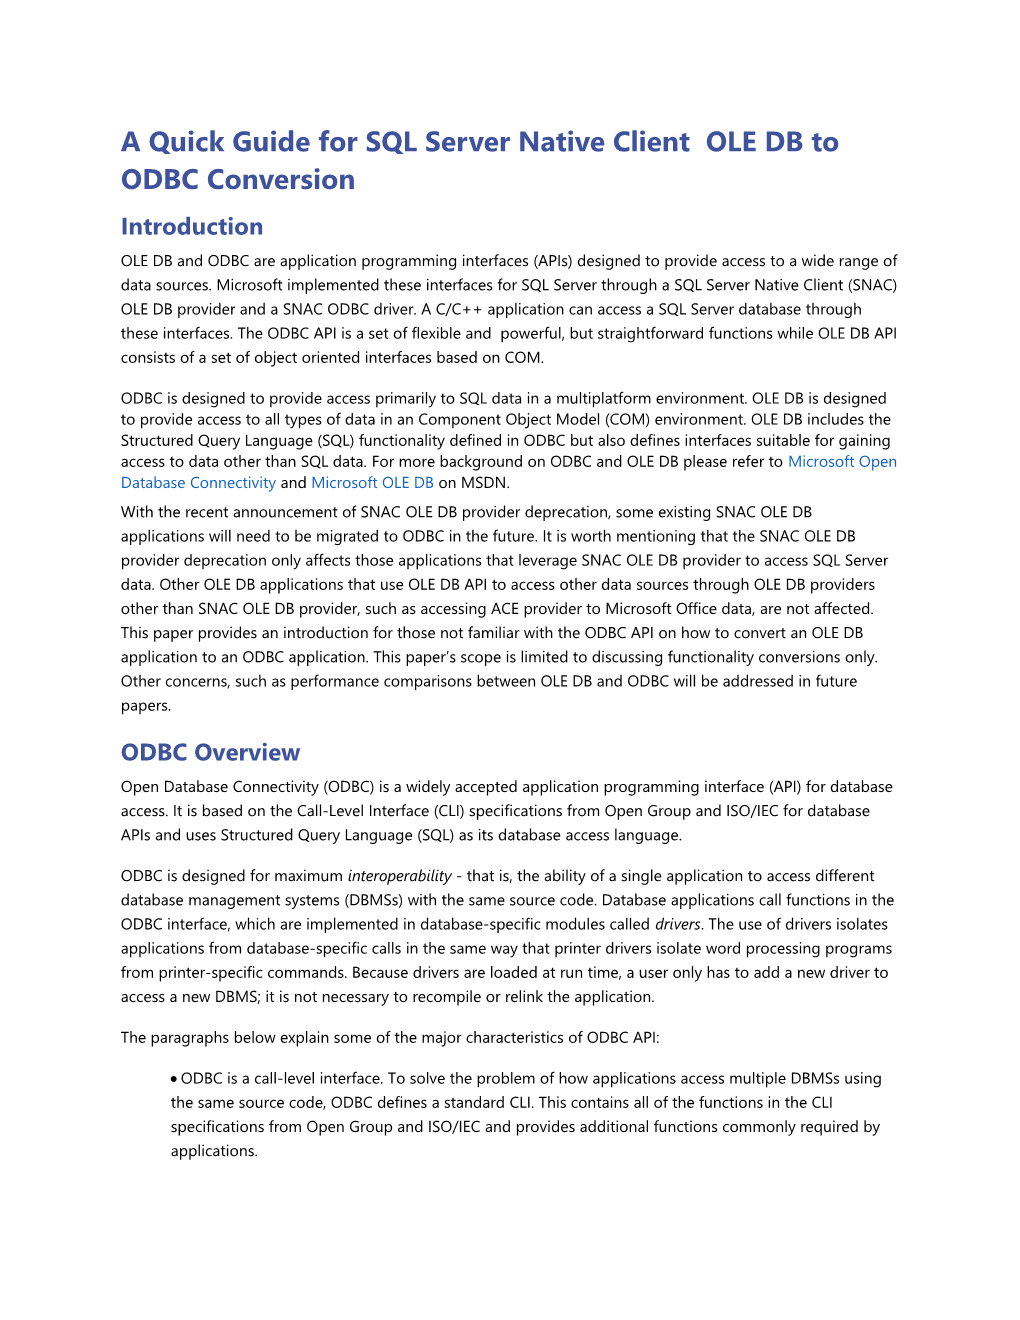 A Quick Guide Forsql Server Native Client OLE DB to ODBC Conversion